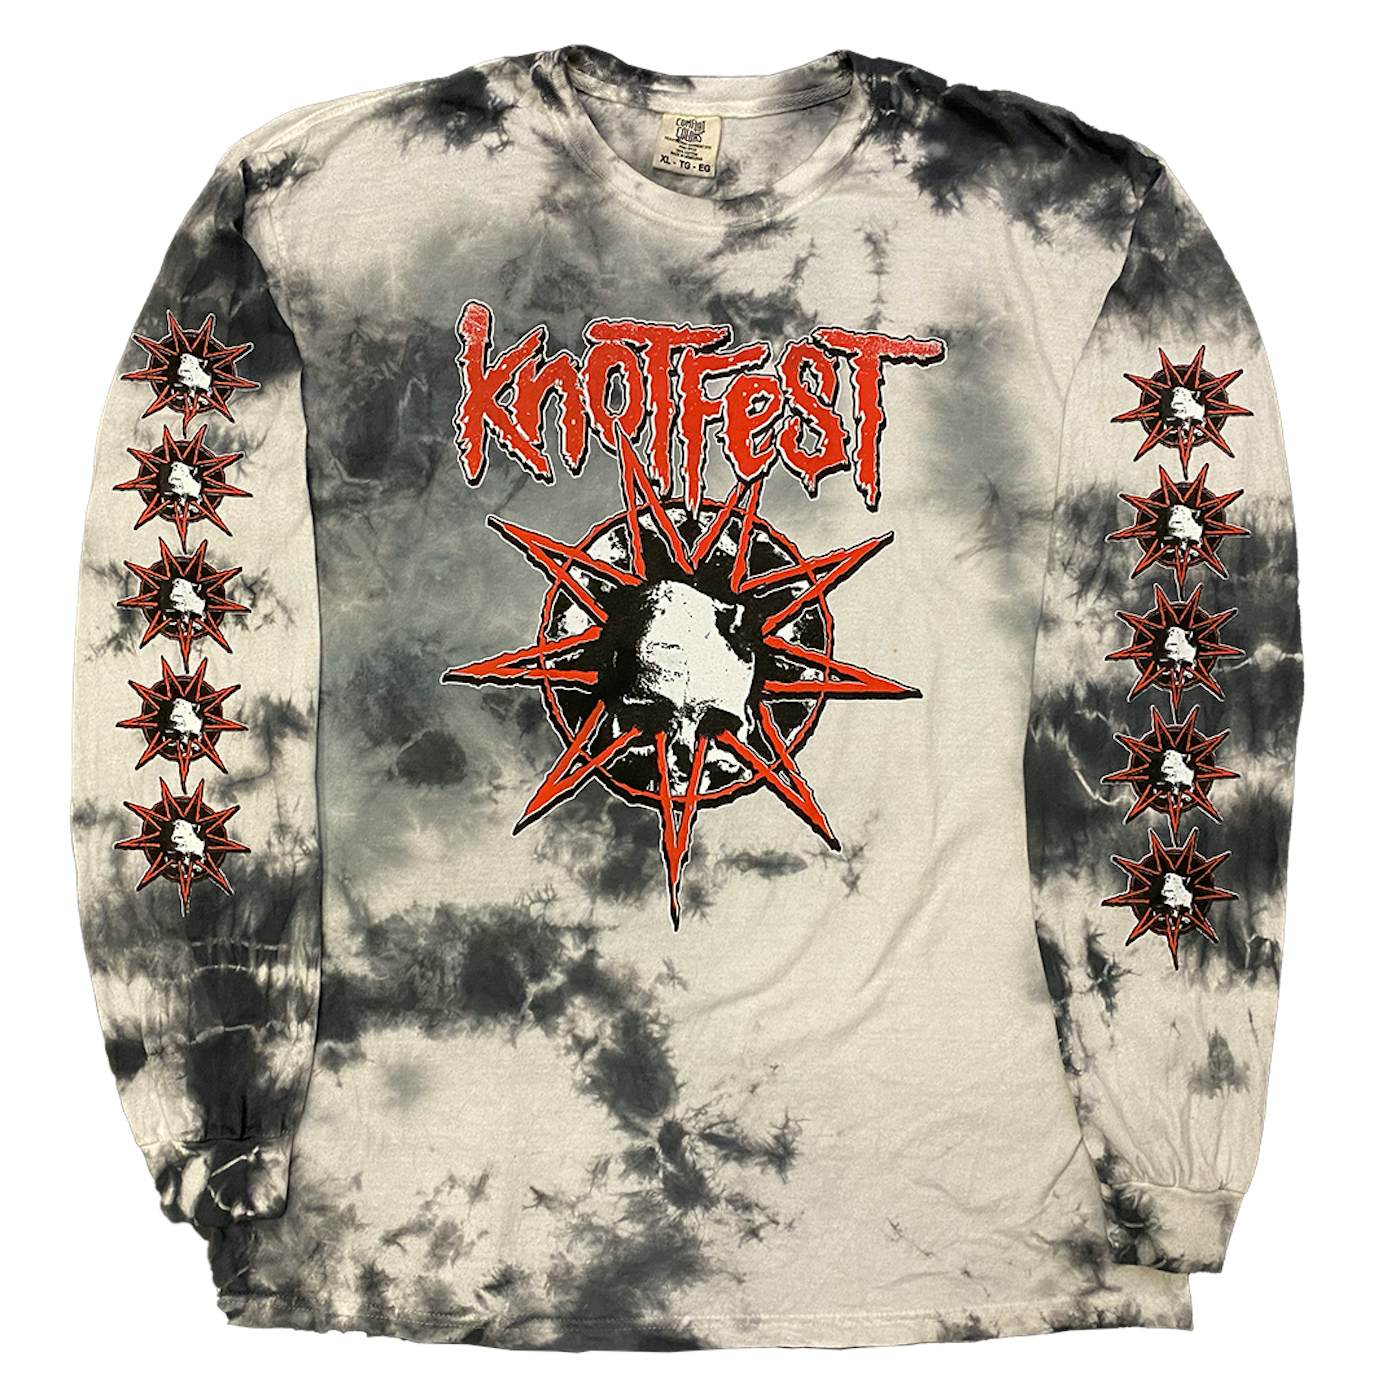 Helt vildt Arrowhead konvergens Slipknot Knotfest Leg 1 Deathknot Red Bomba Tie Dye Long Sleeve T-Shirt